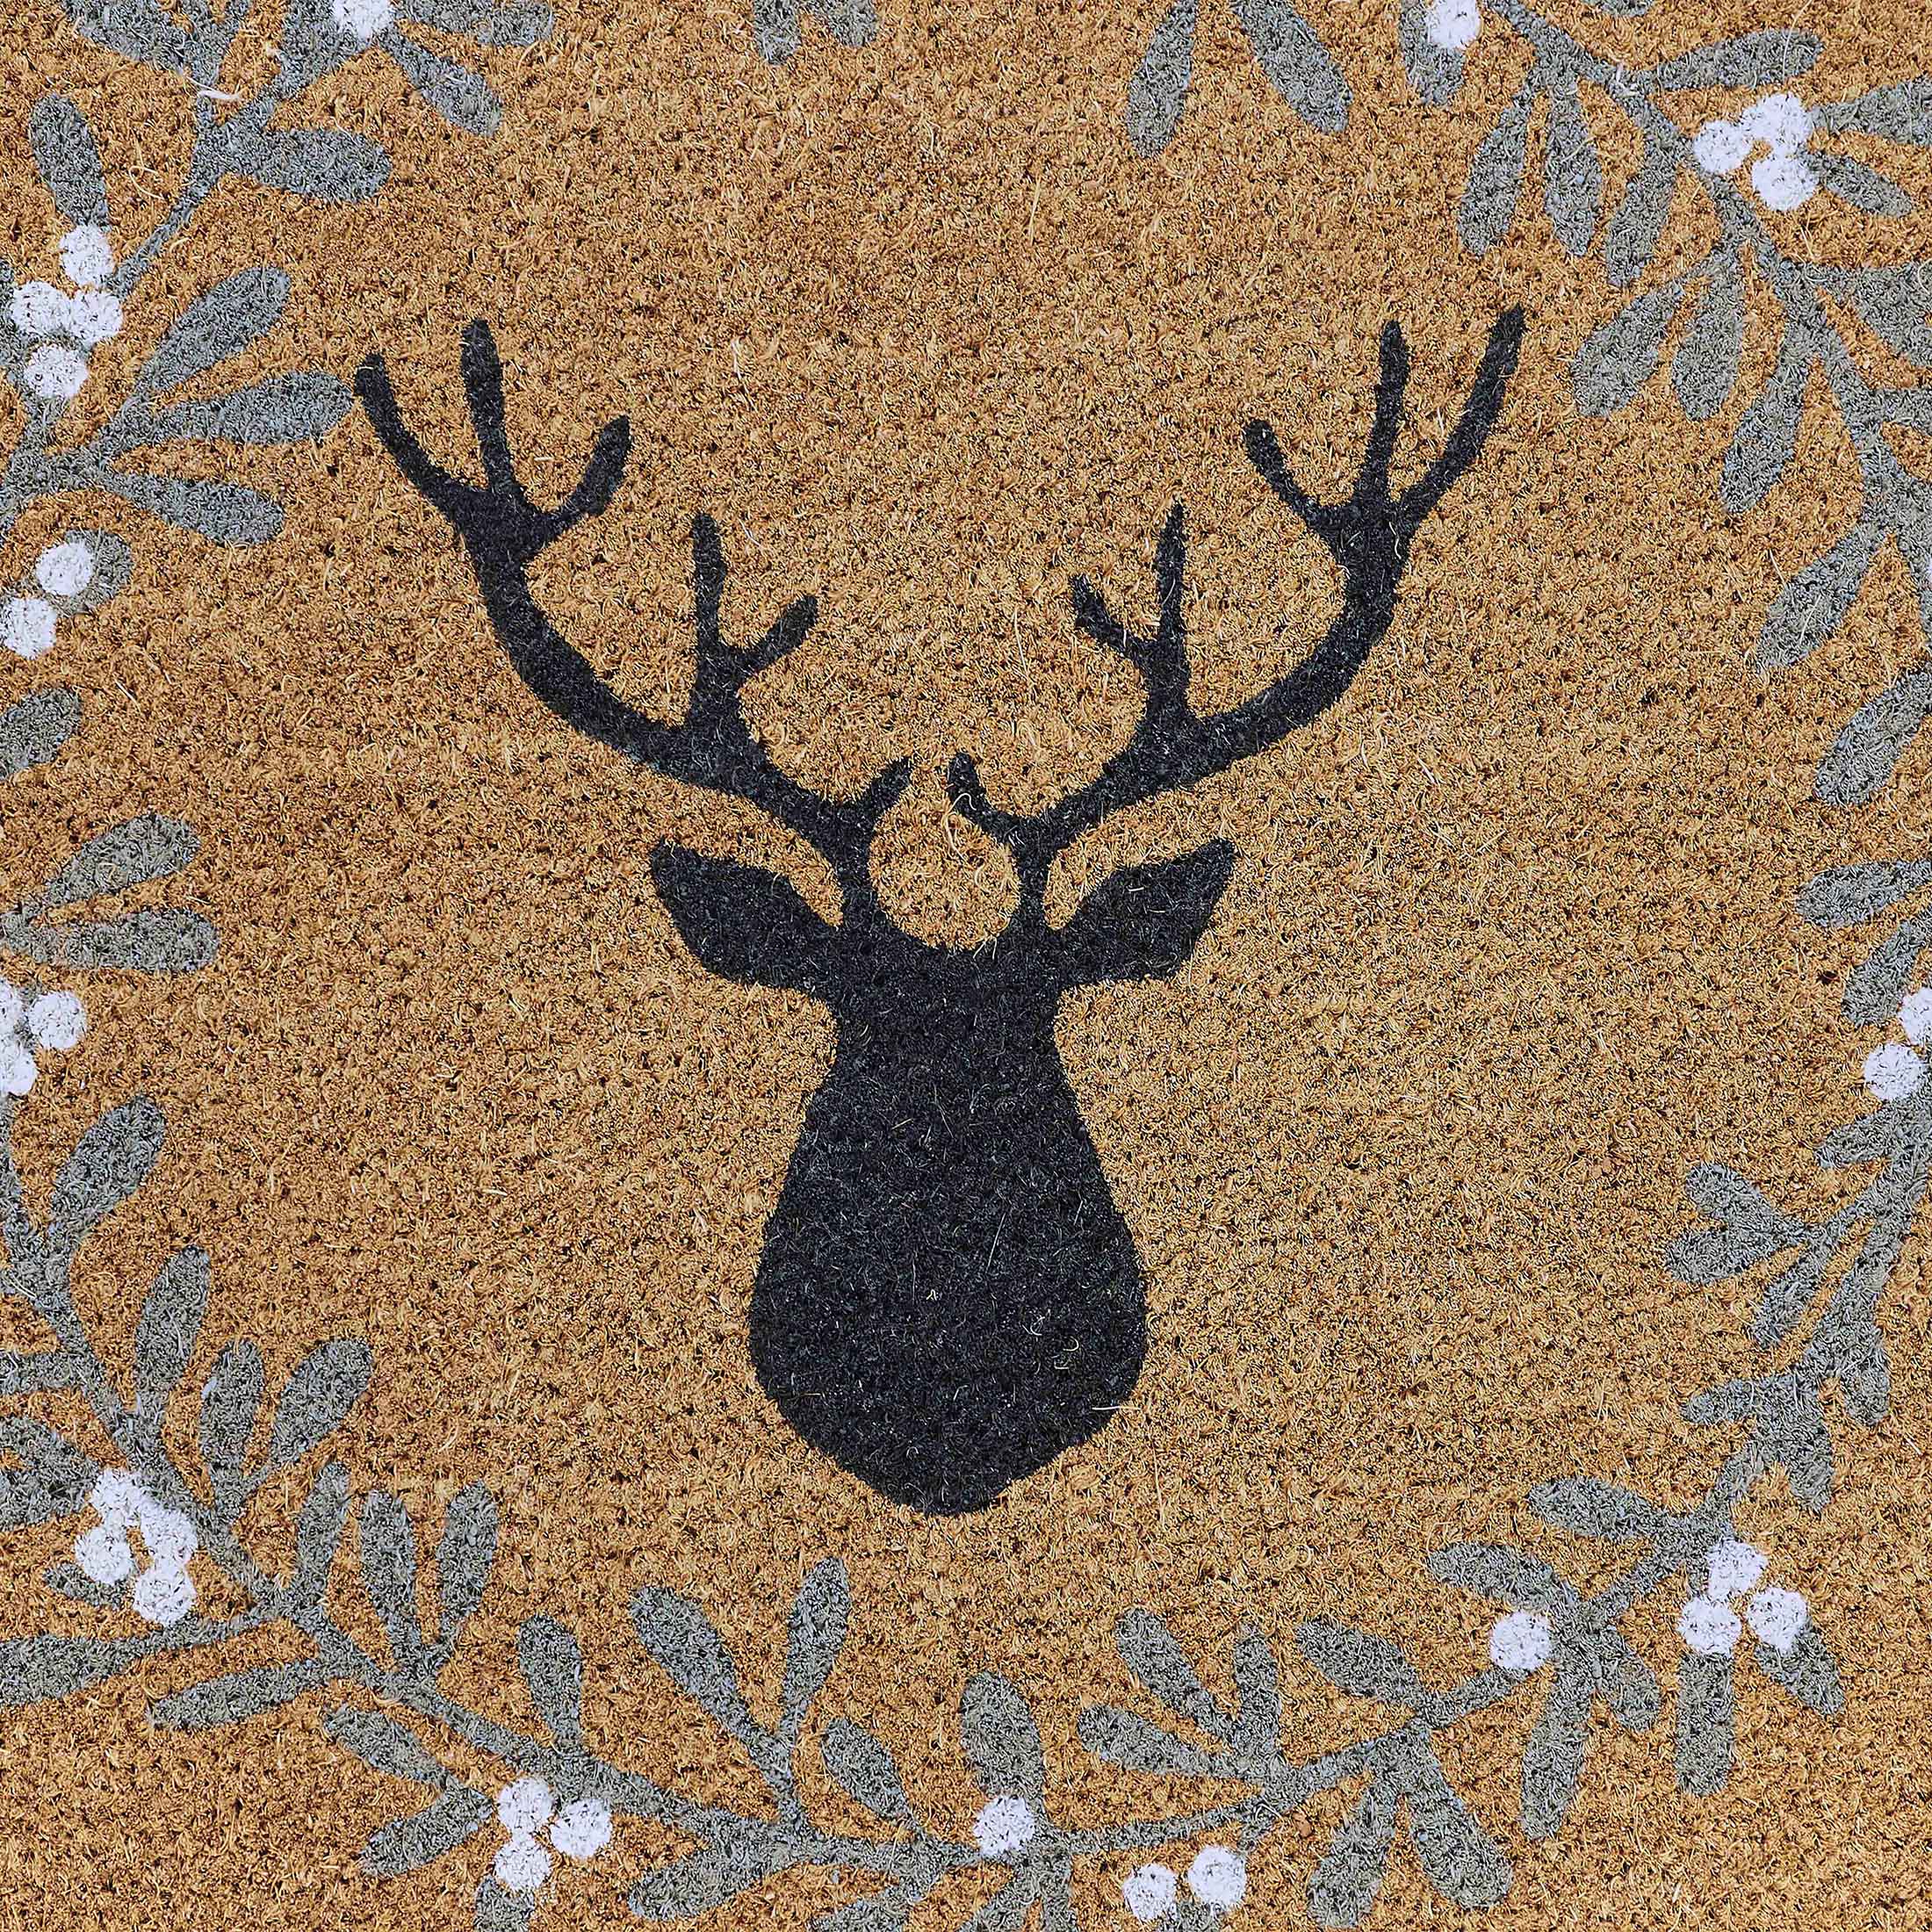 My Texas House Holiday Reindeer Coir Doormat, 30" x 48" - image 3 of 5